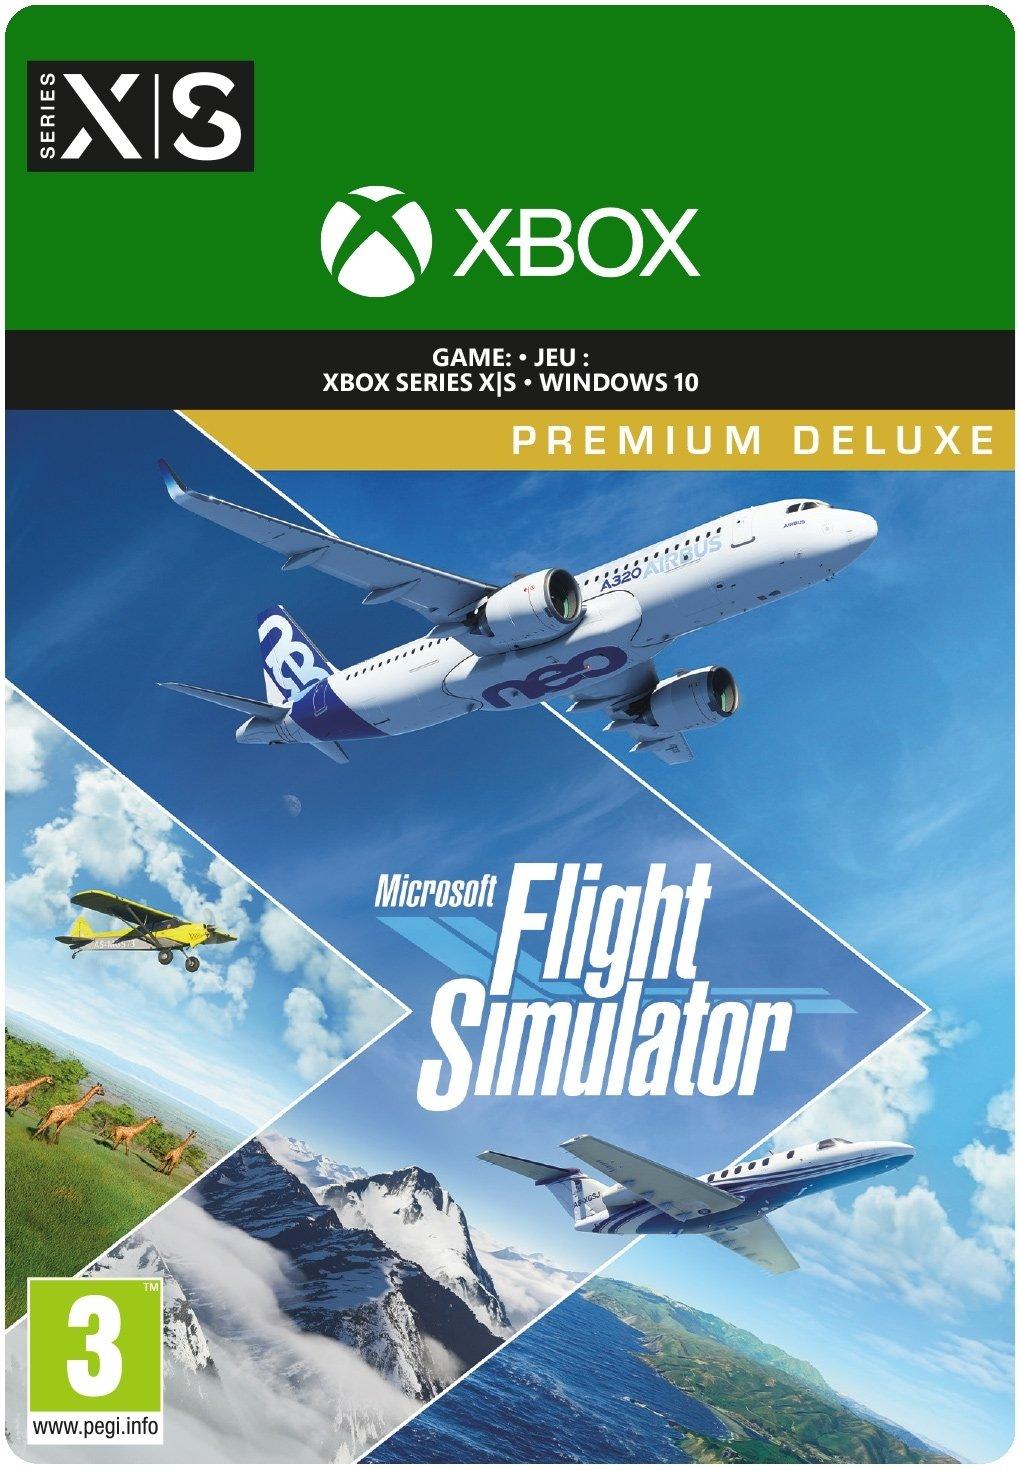 Microsoft Flight Simulator: Premium Deluxe Edition - Xbox Series X/Win10 - Game | 2WU-00032 (2ff8fe55-0dc4-bf4a-8bf5-119ad0a836cd)